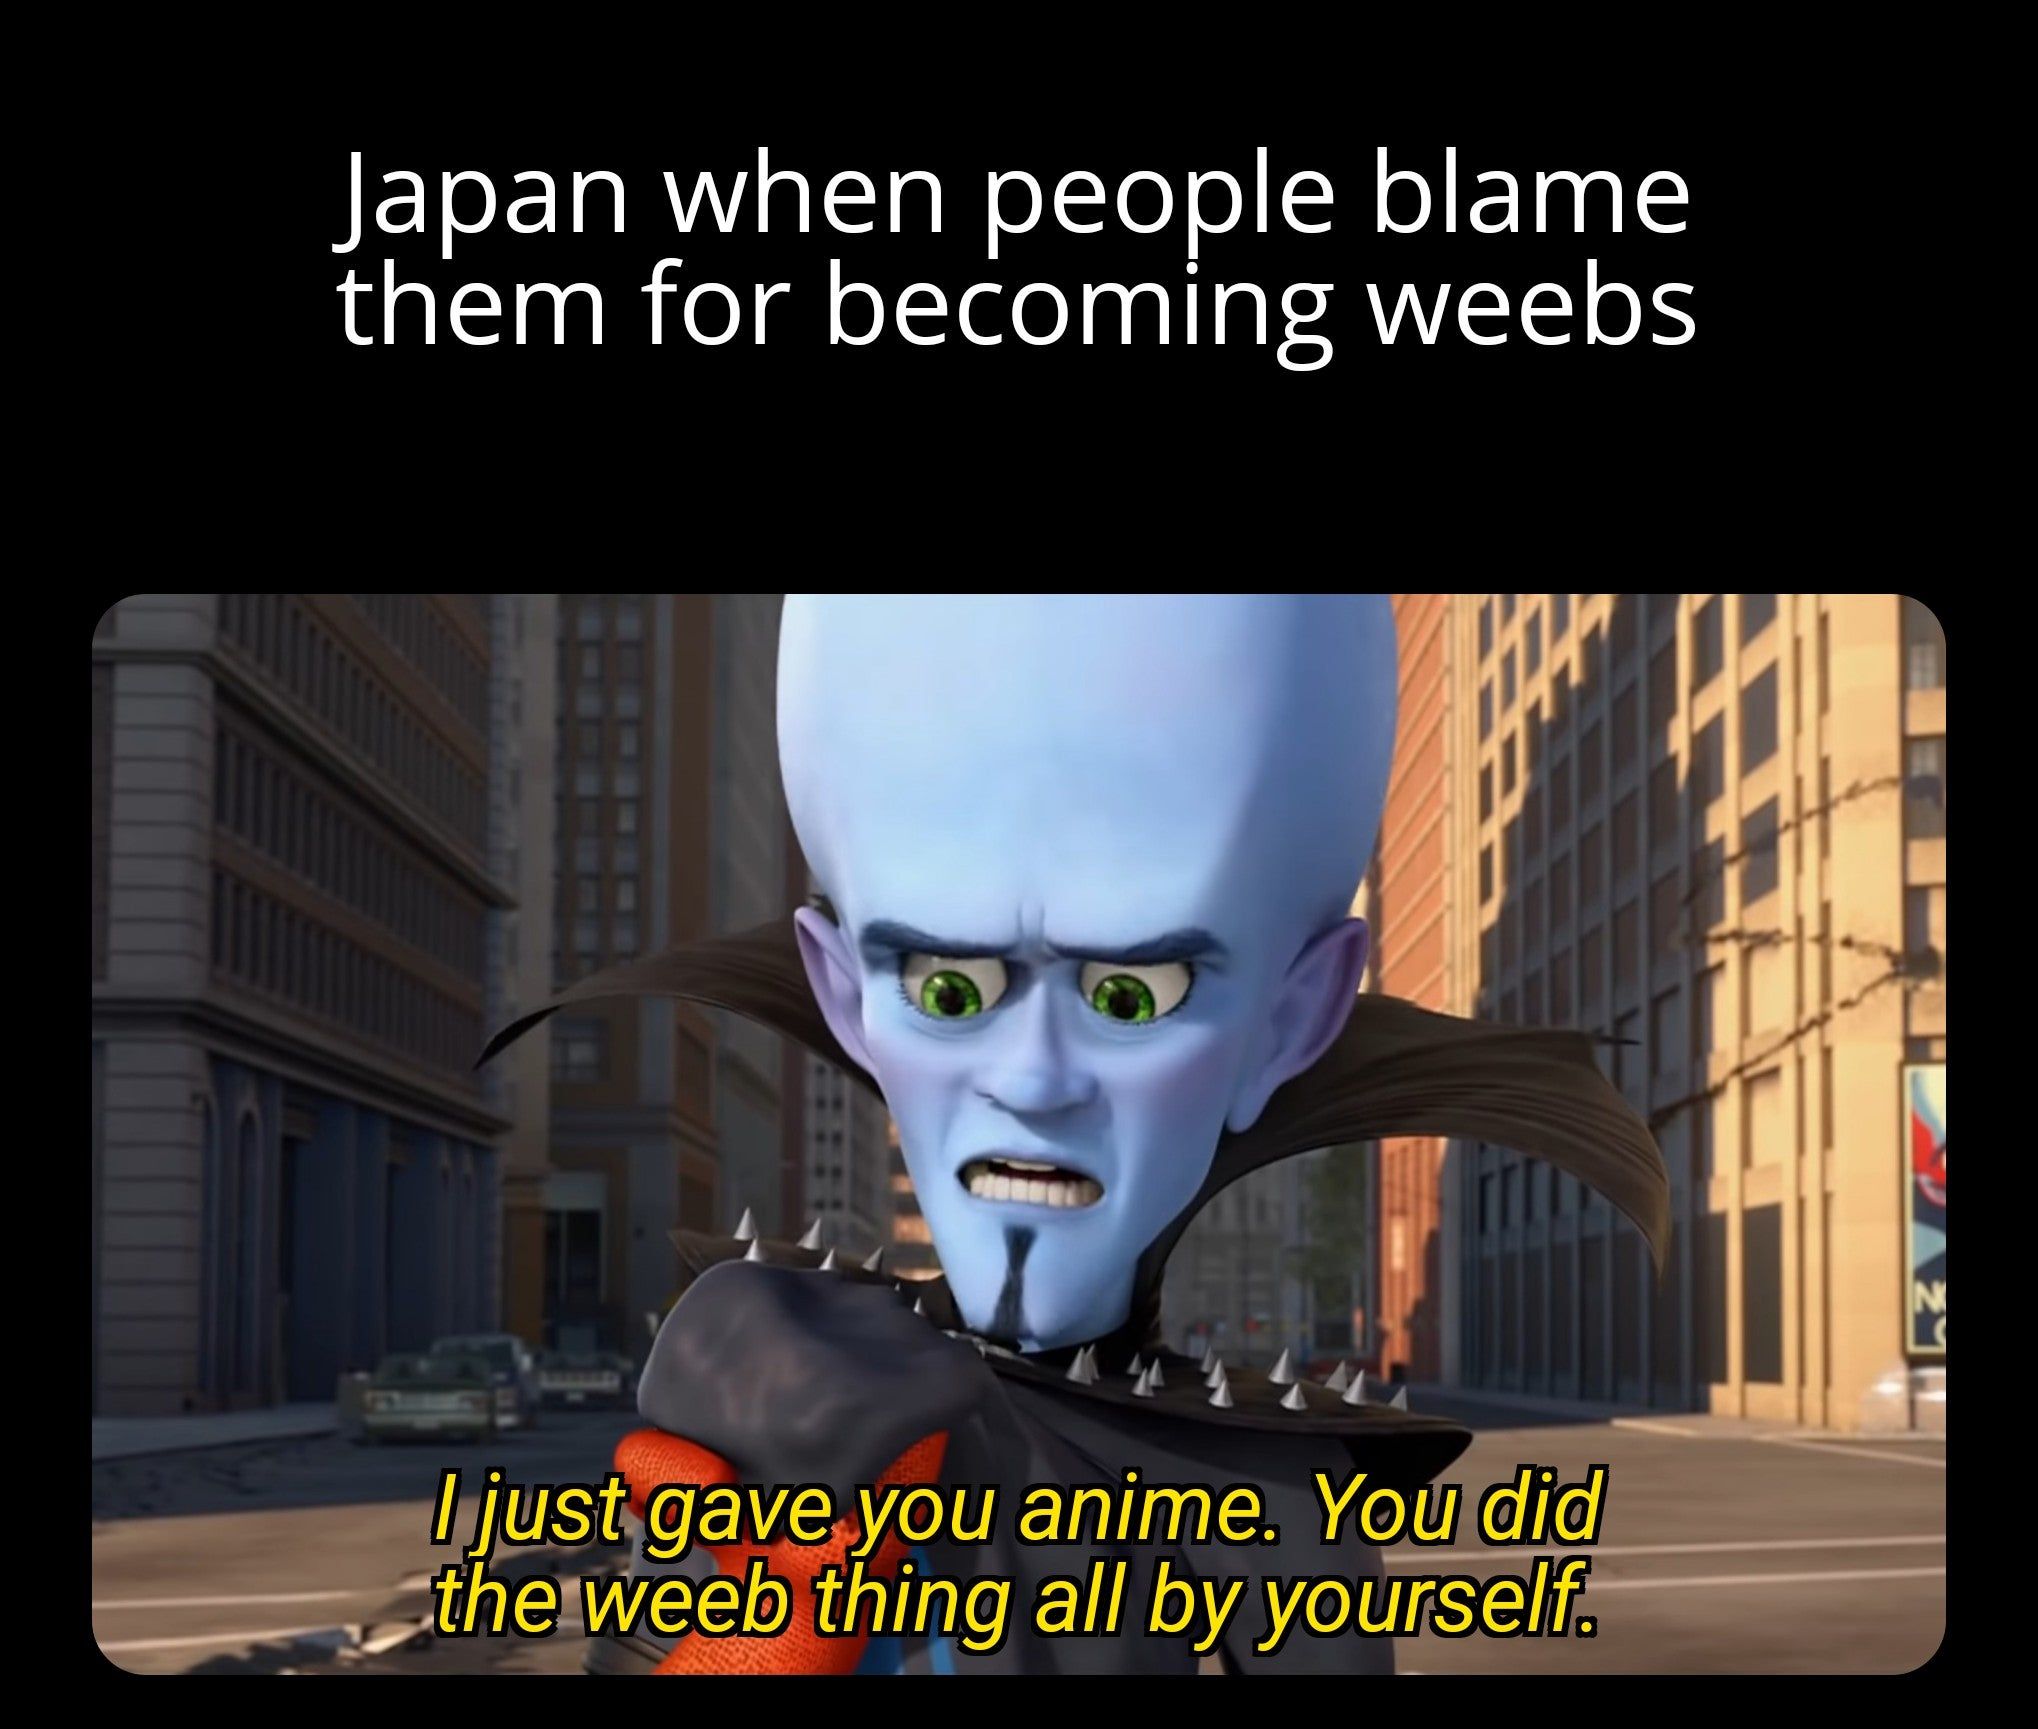 Japan is innocent